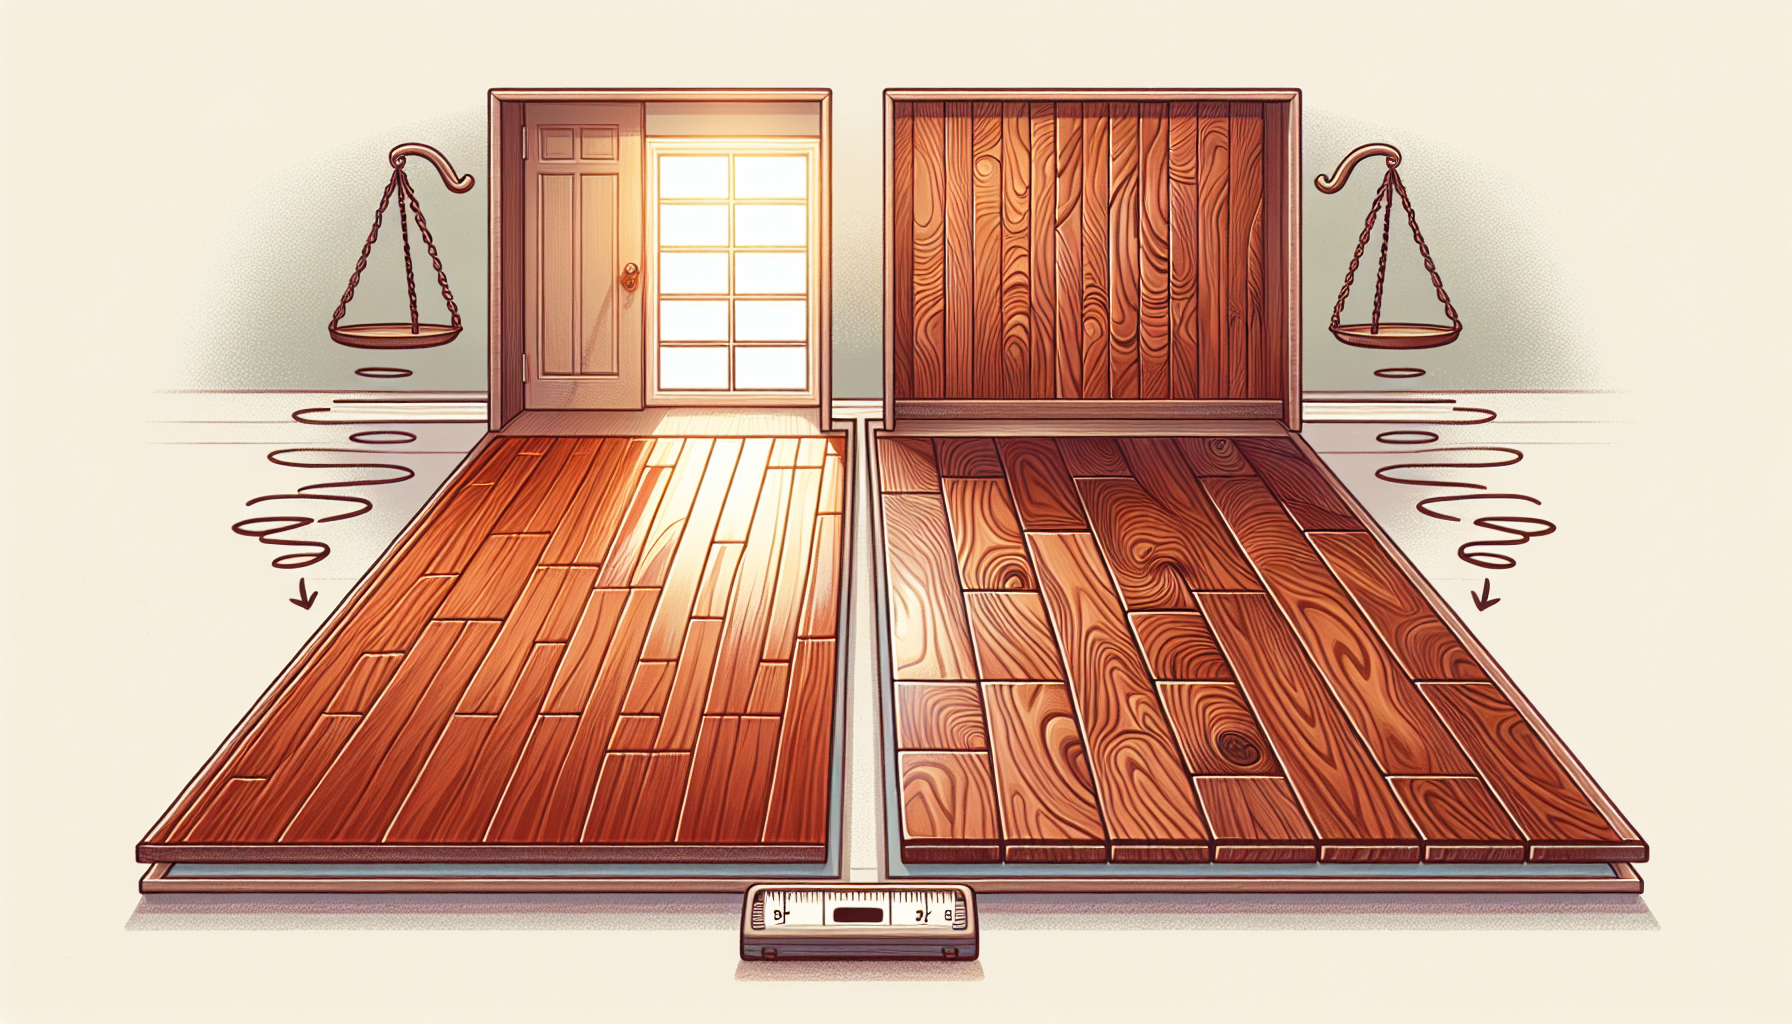 Comparison of wood tile and hardwood flooring